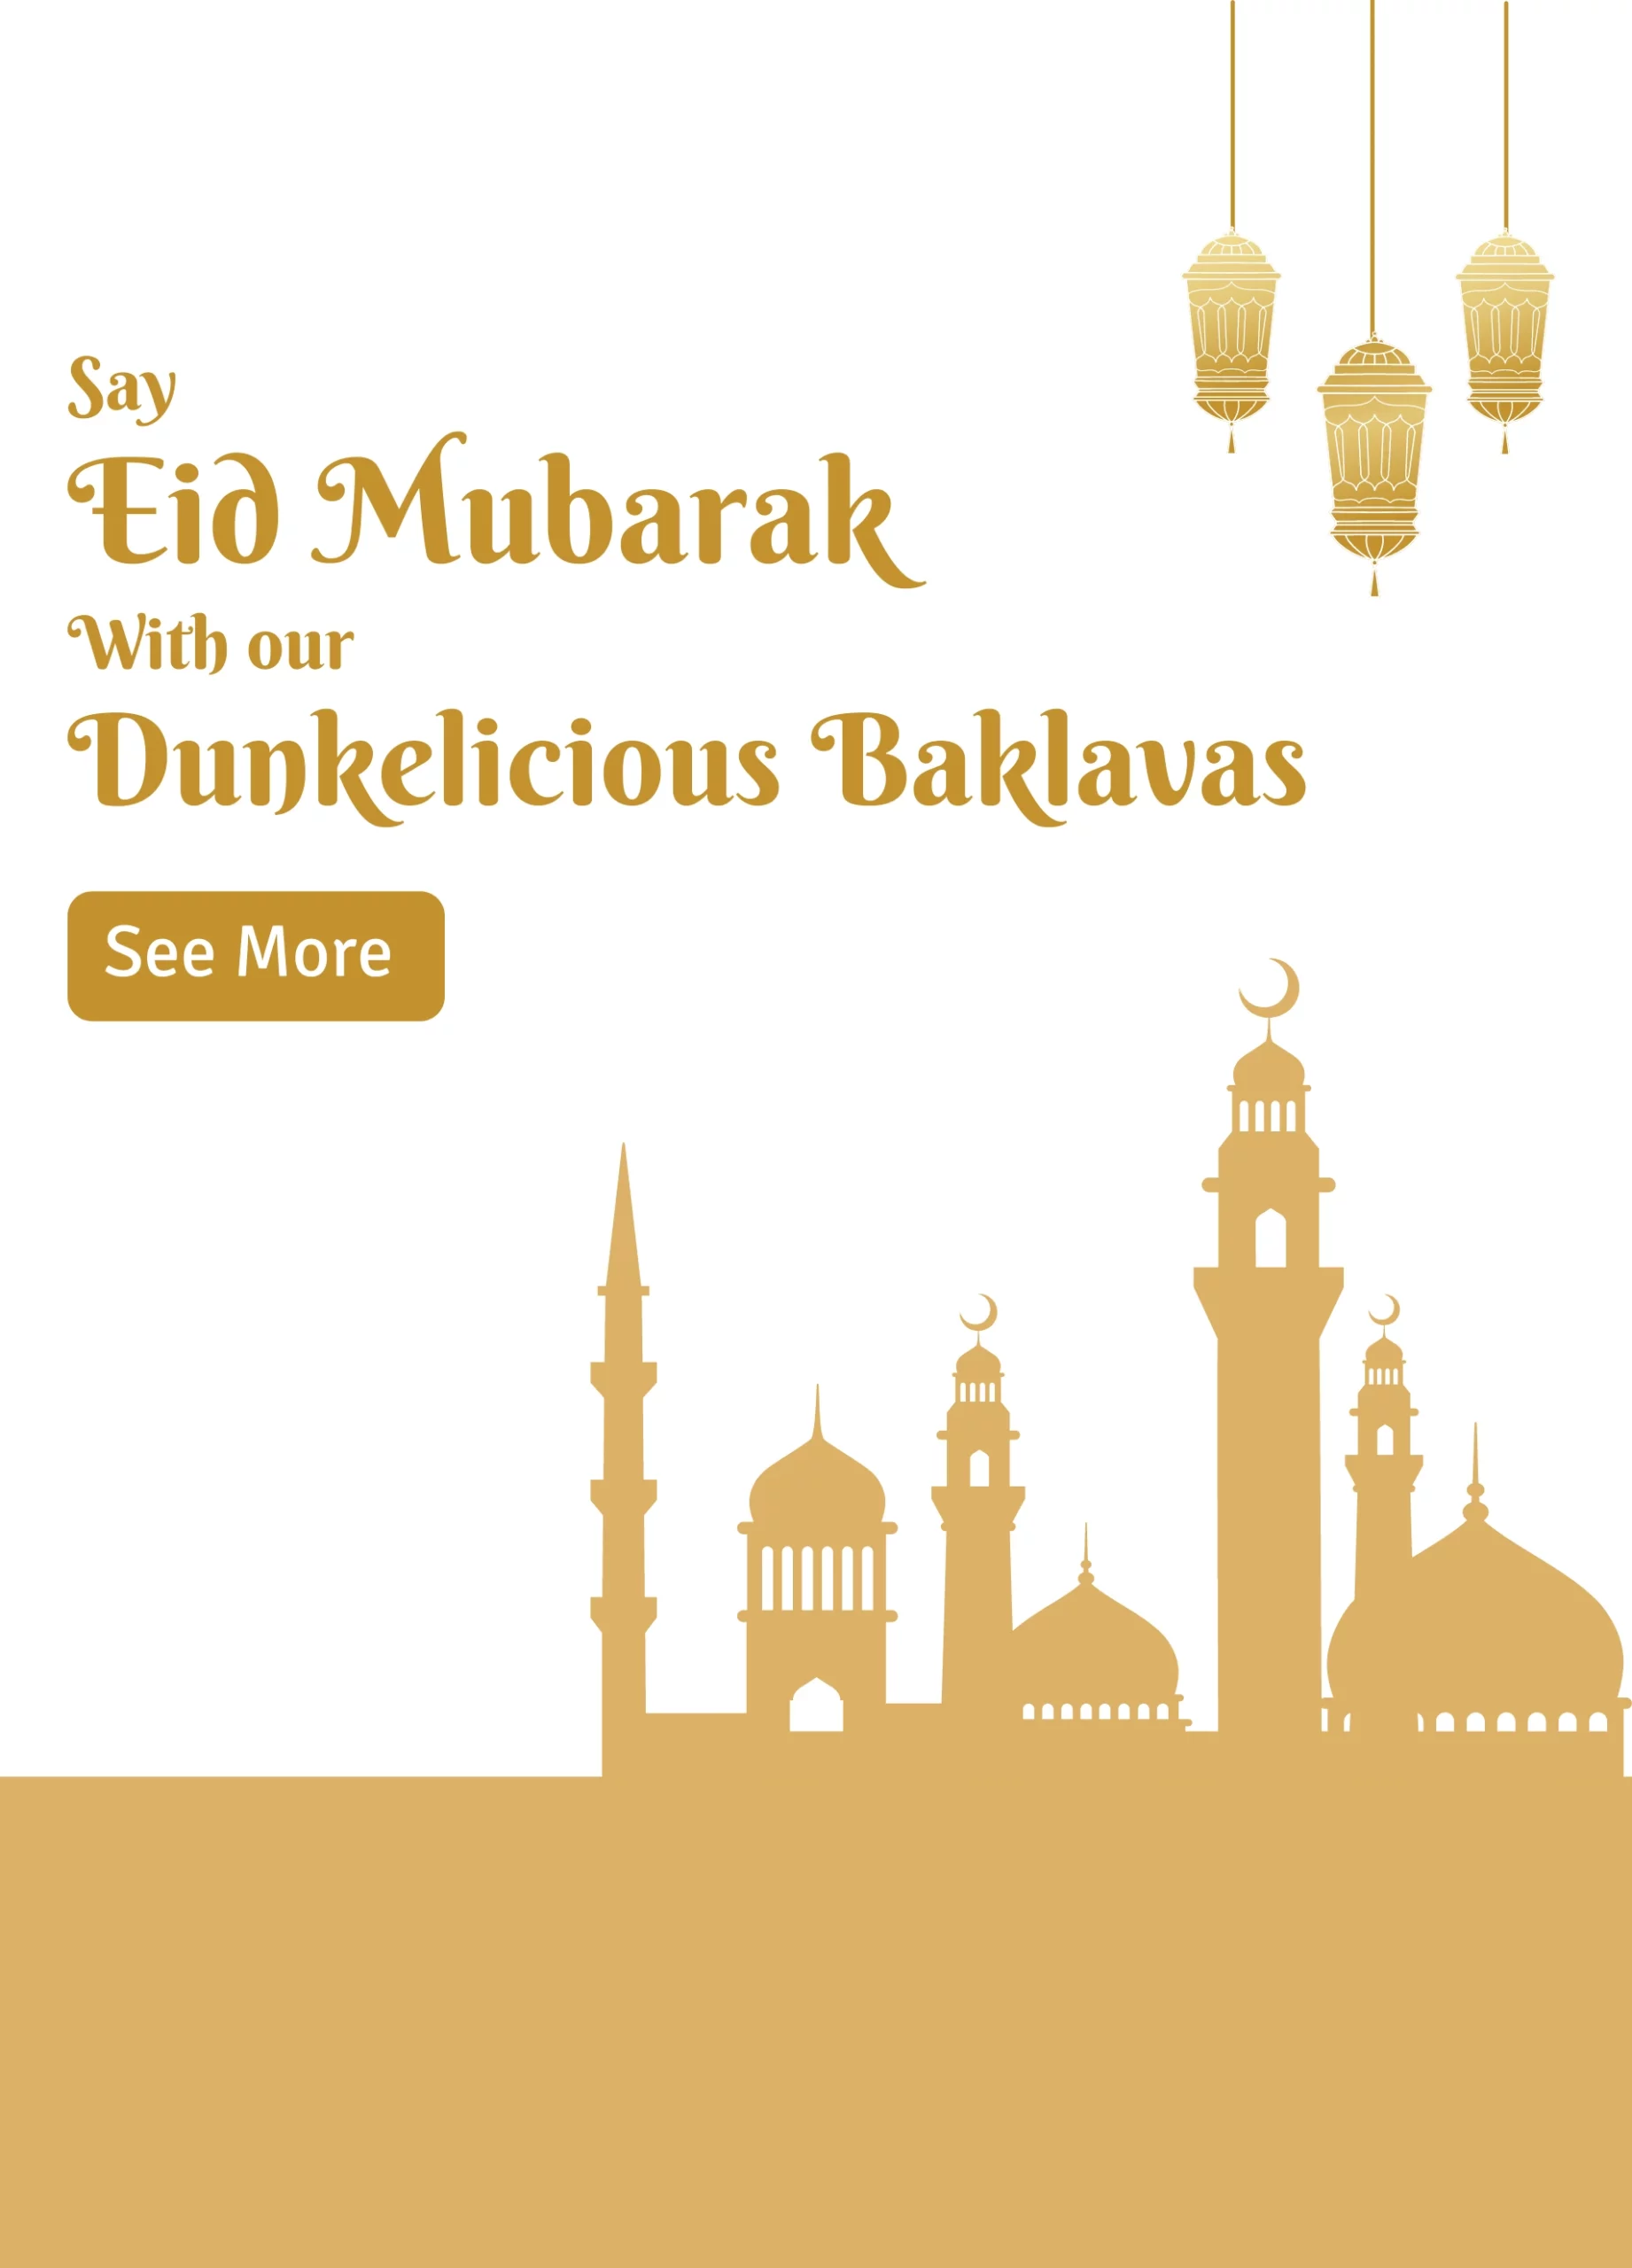 Say 2 scaled Eid gift box - Eid Mubarak - Buy Baklava Online